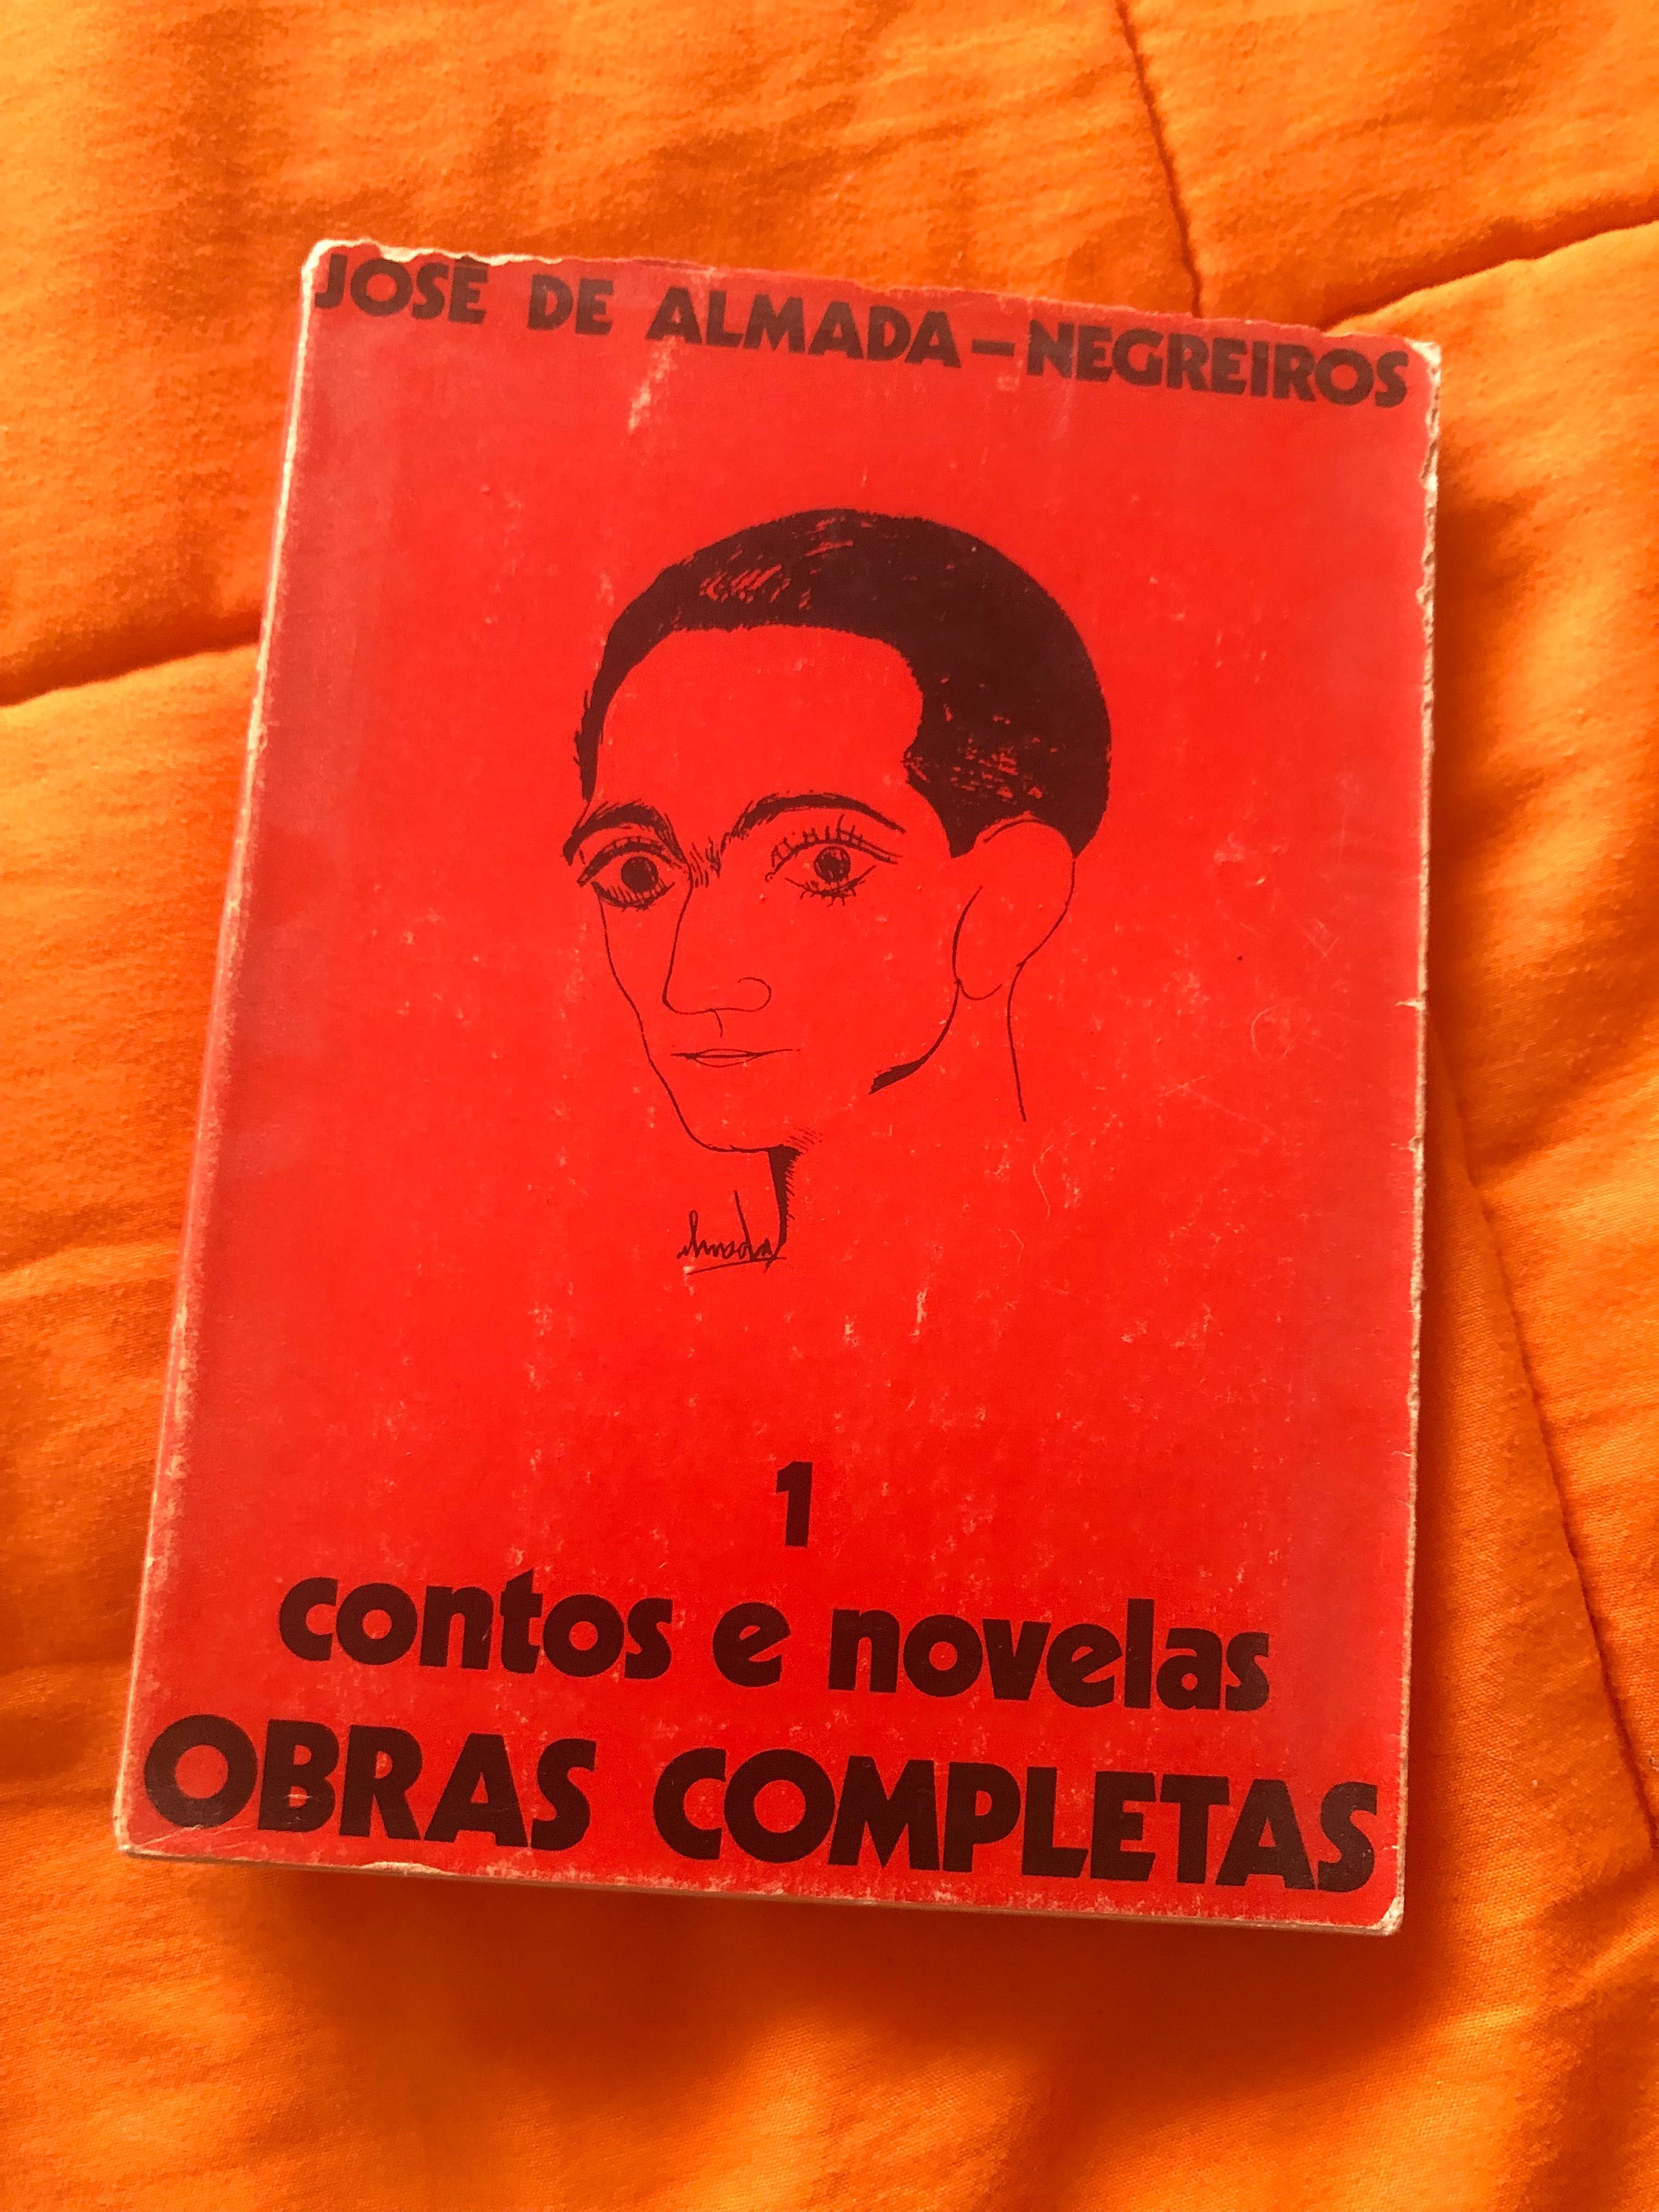 Livro de José de Almada Negreiros, “Contos e Novelas” (de 1970)